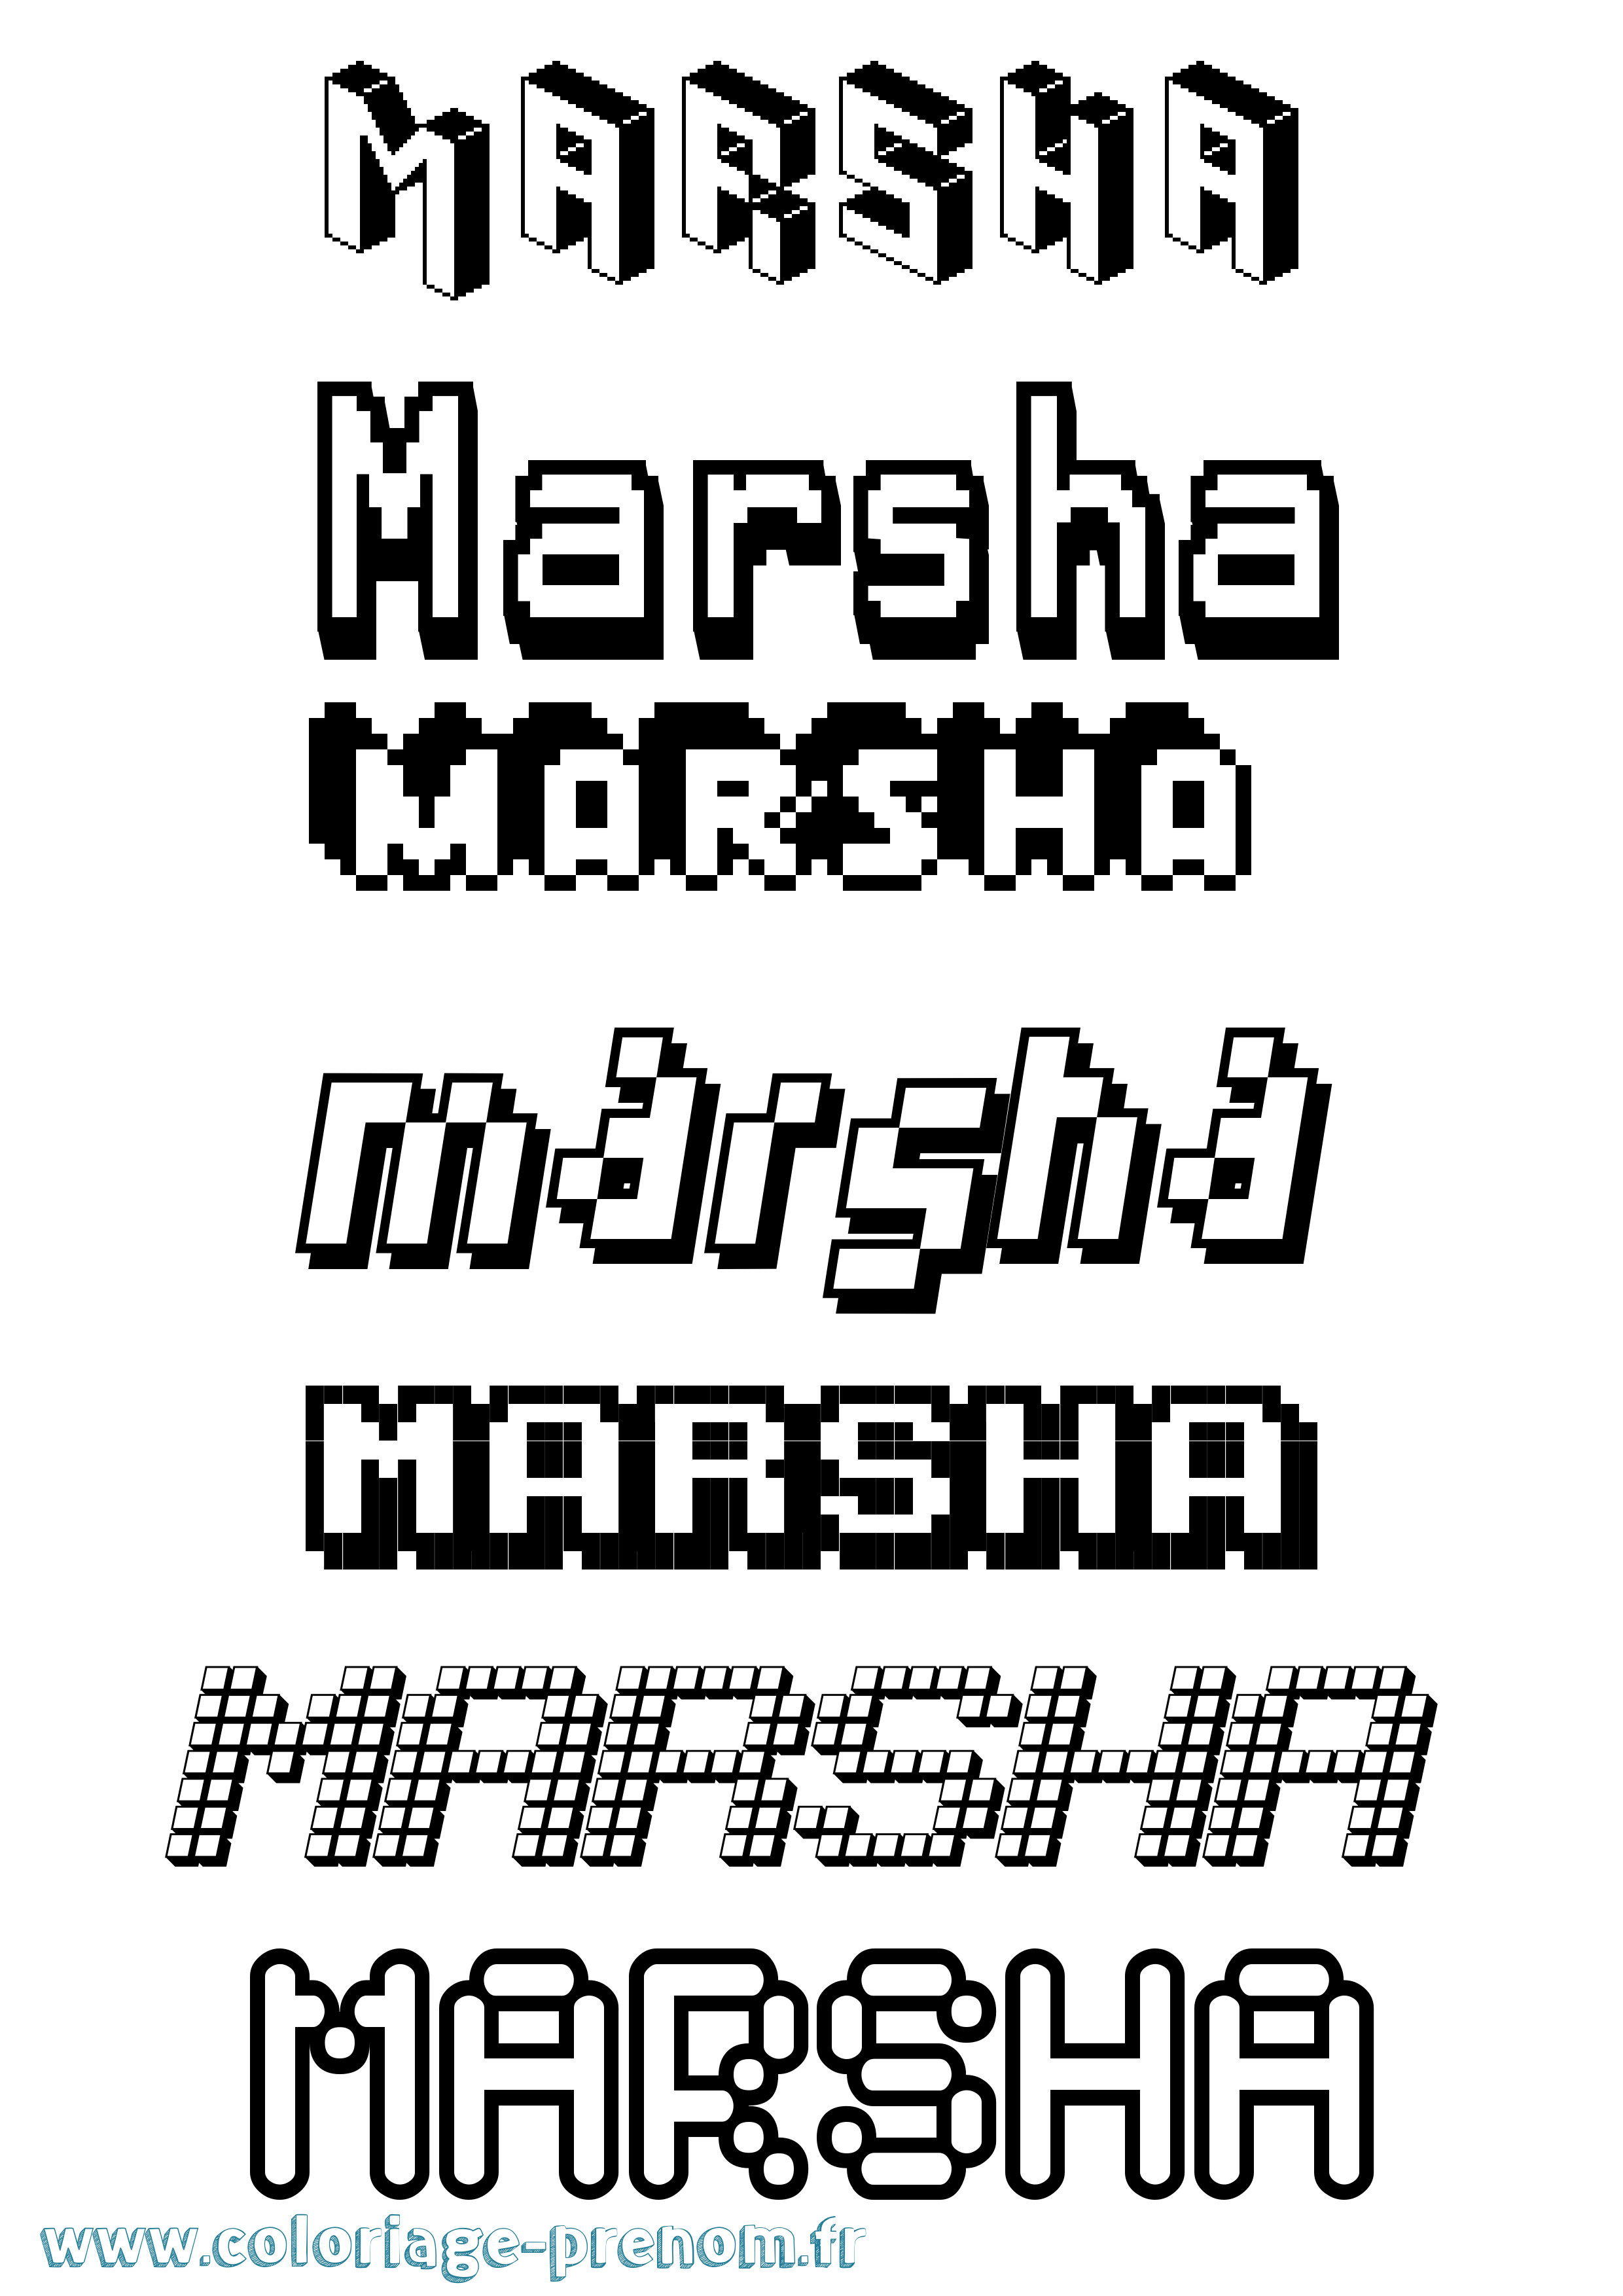 Coloriage prénom Marsha Pixel